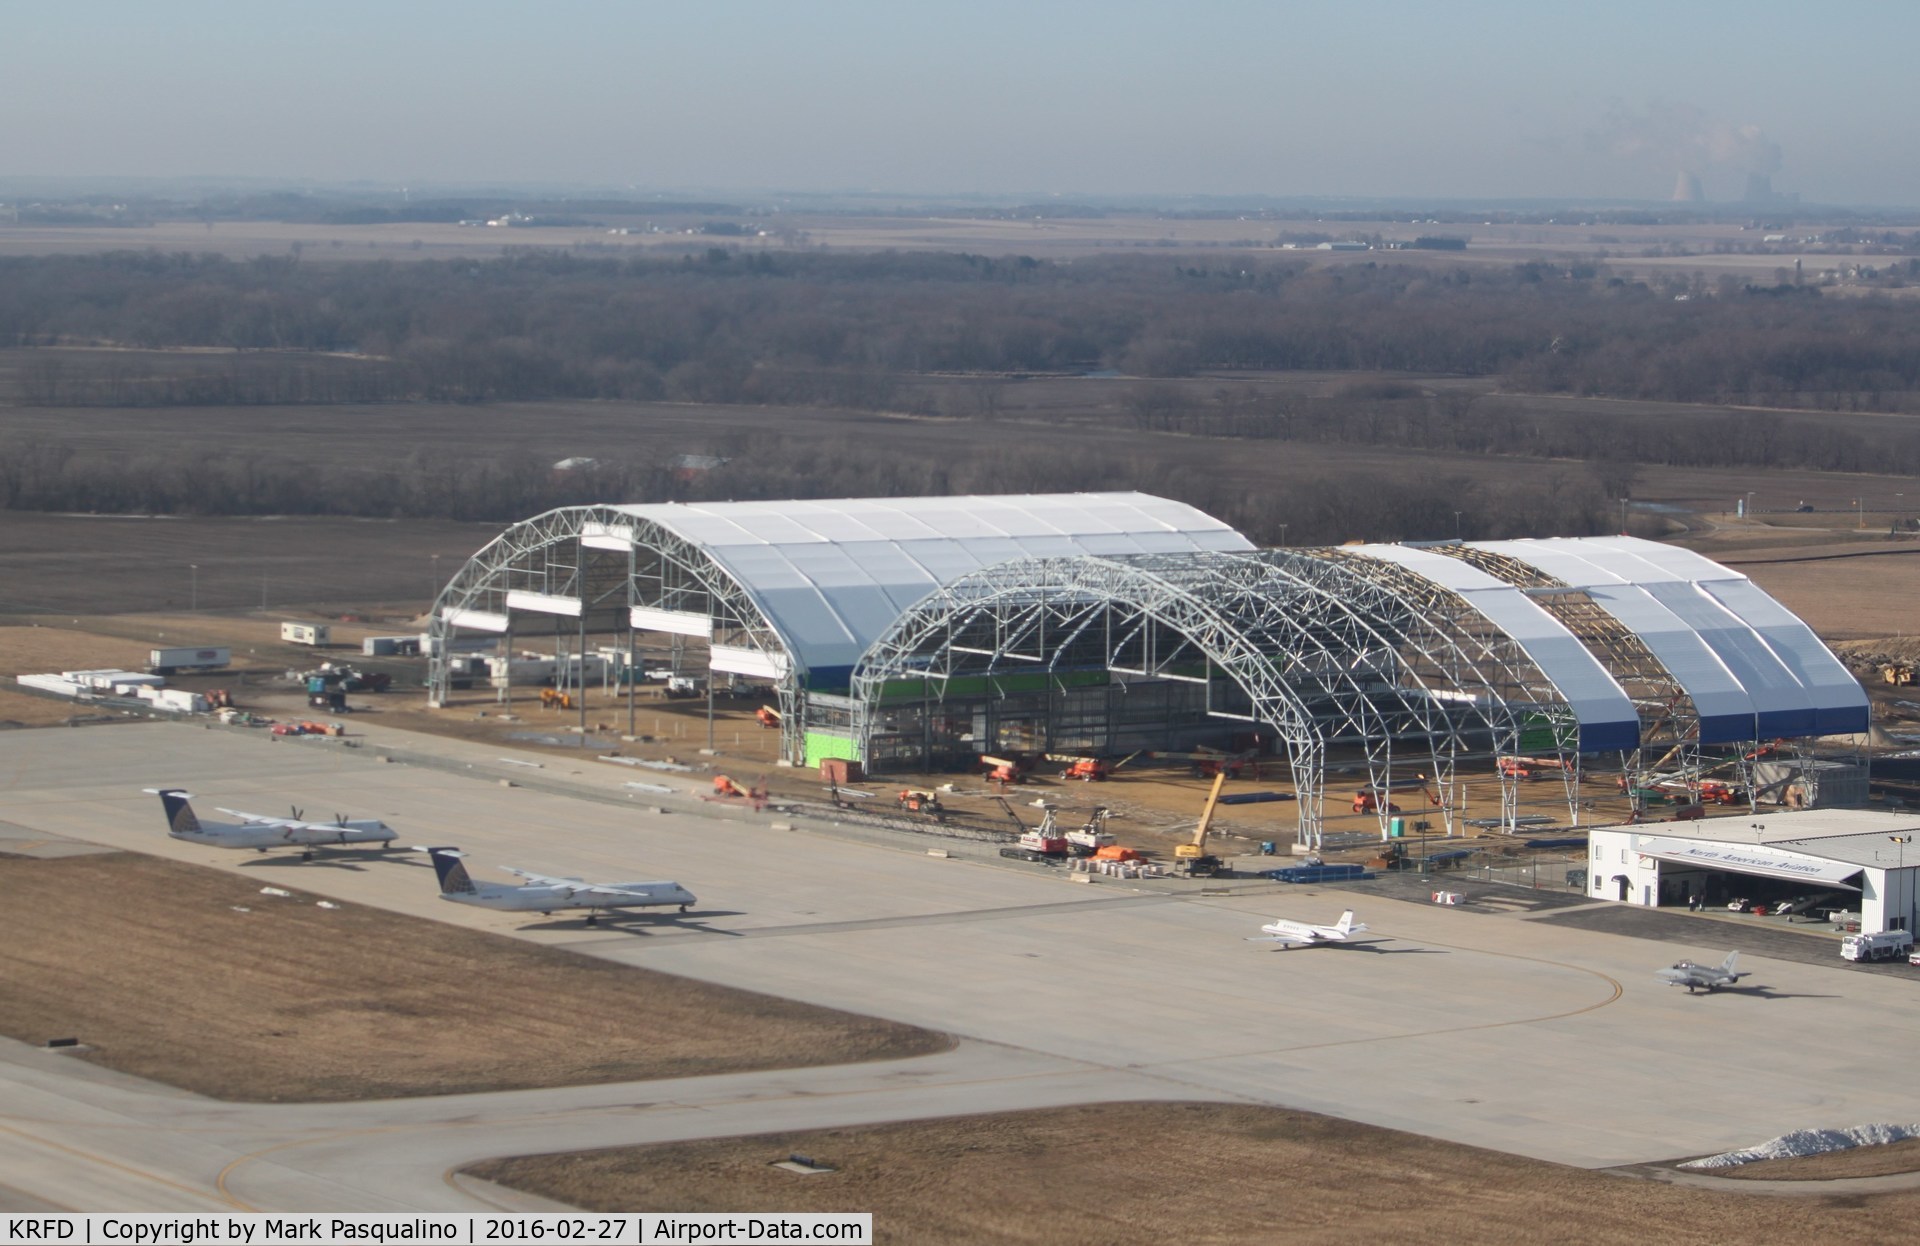 Chicago/rockford International Airport (RFD) - New hangars being built